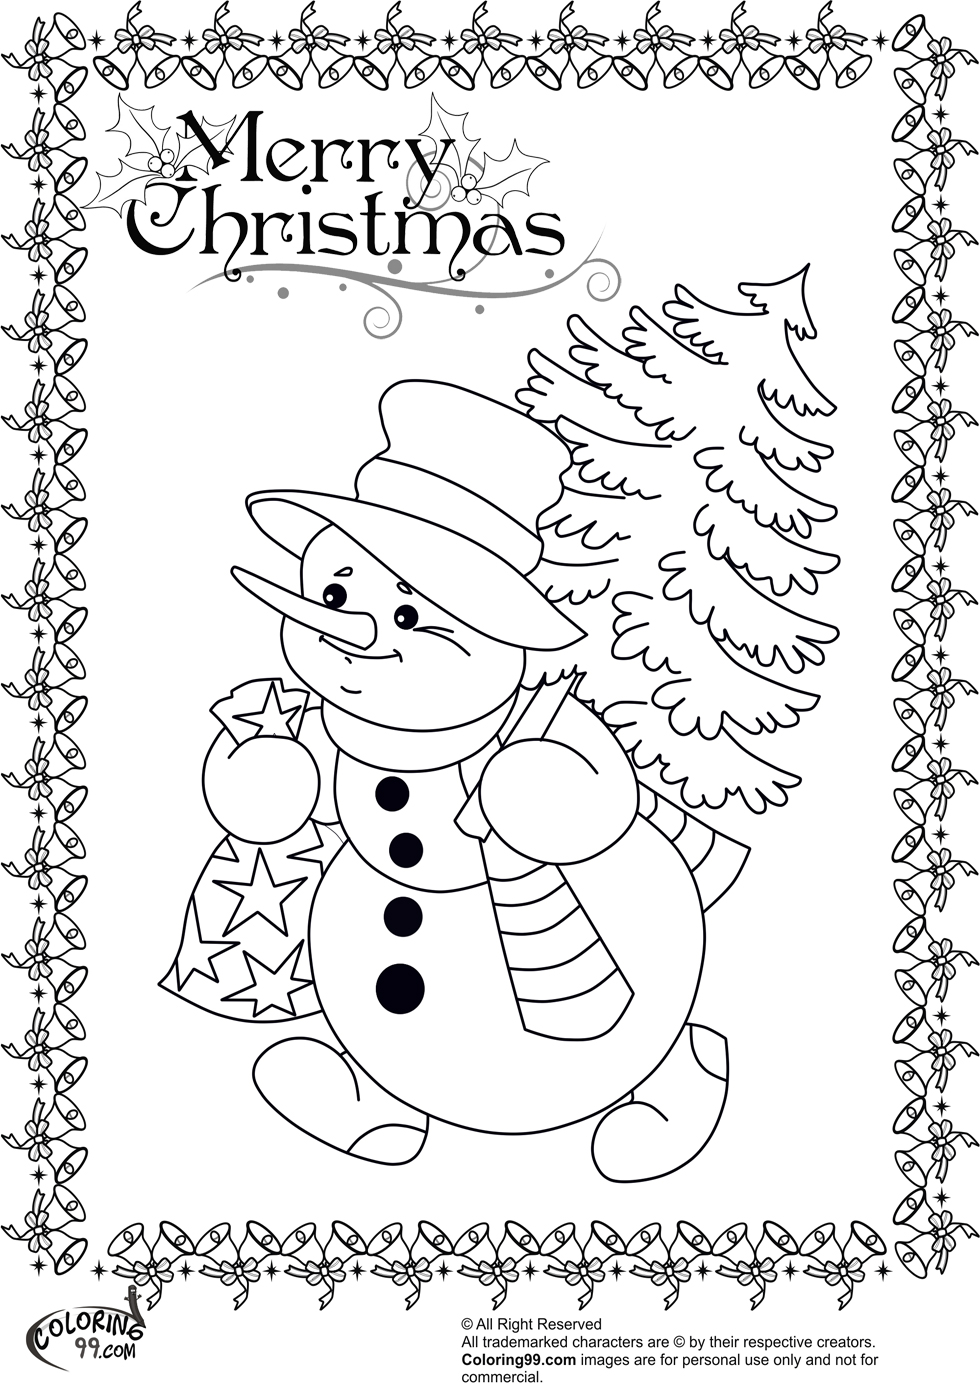 Download Snowman Coloring Pages | Team colors